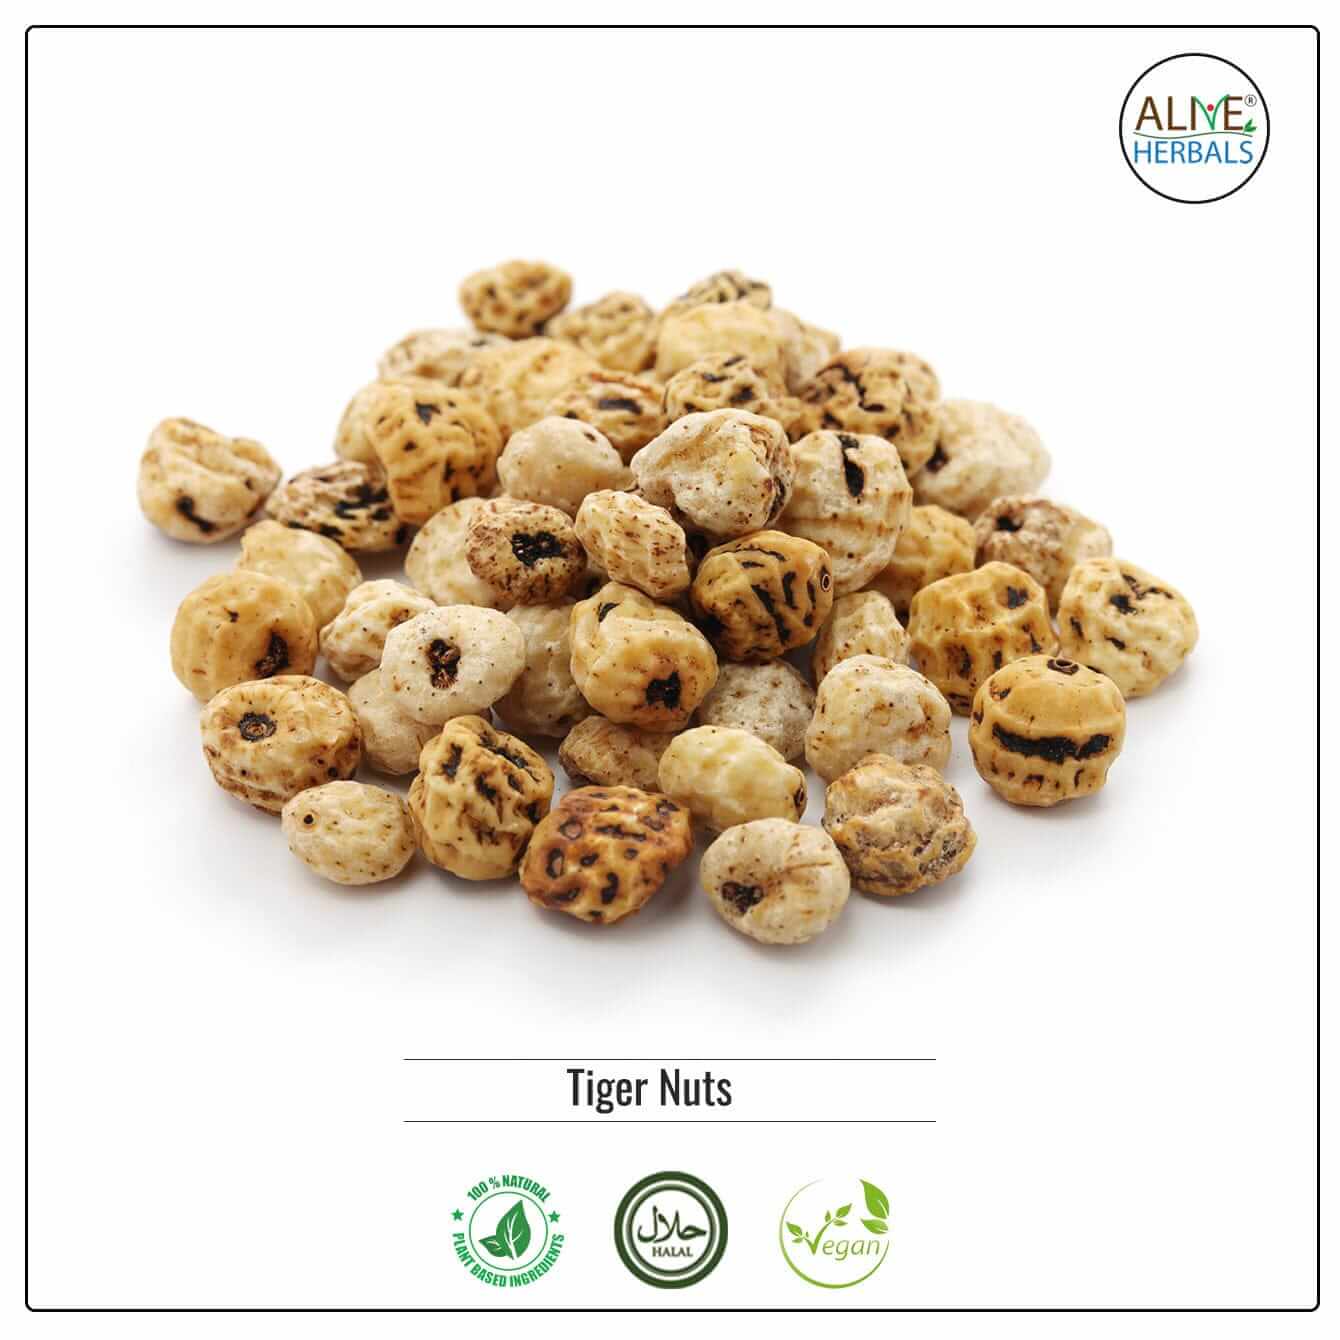 Tiger Nuts - Buy at Natural Food Store | Alive Herbals.